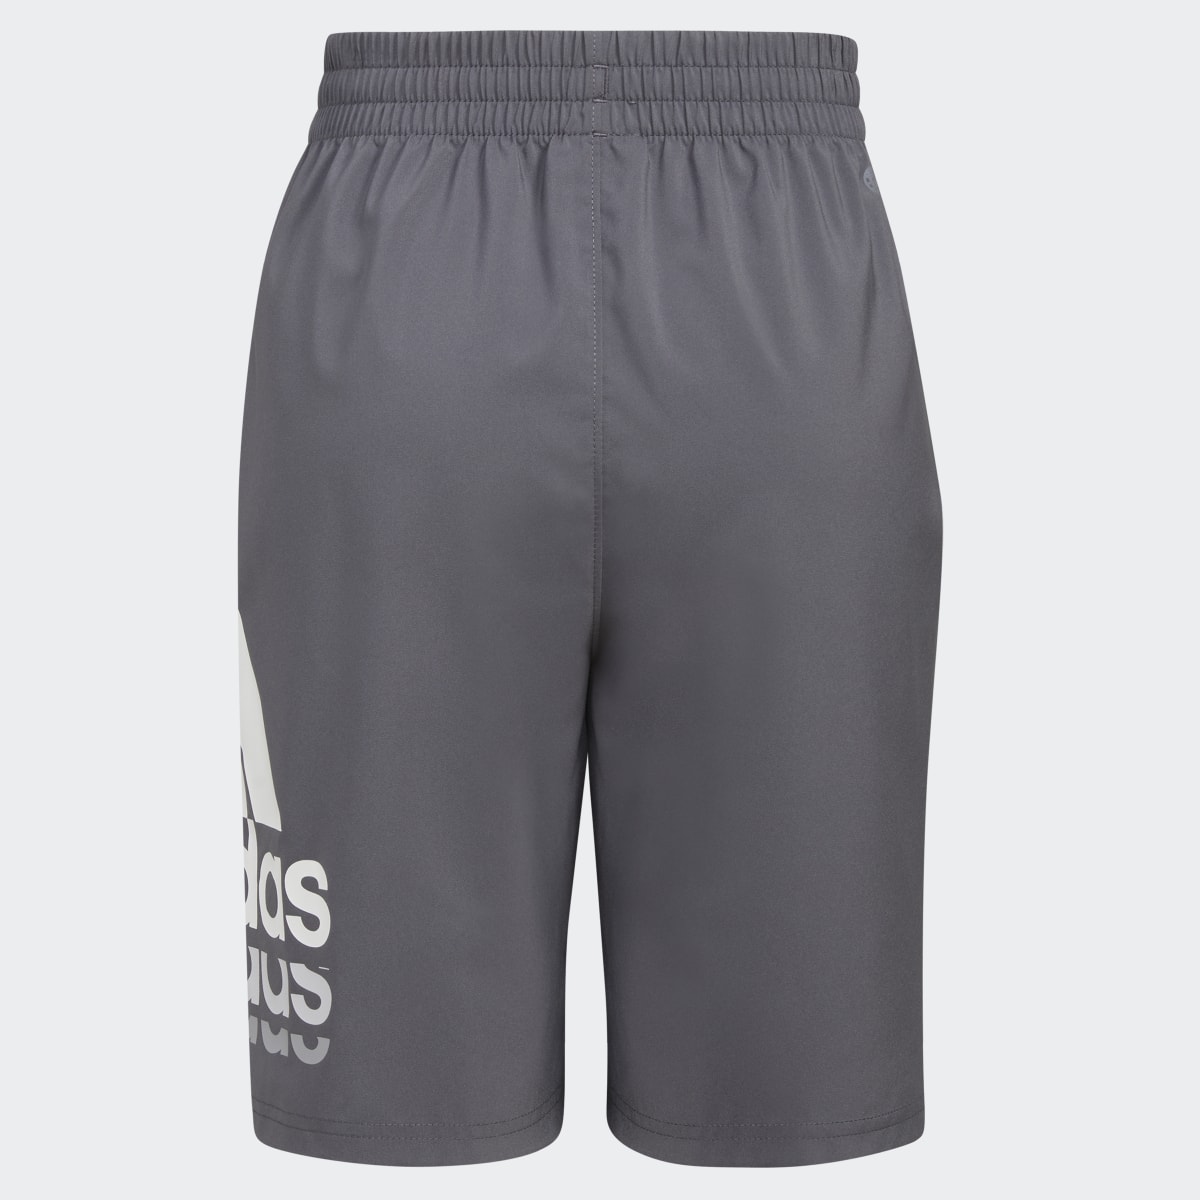 Adidas Essentials Woven Badge of Sport Shorts. 4